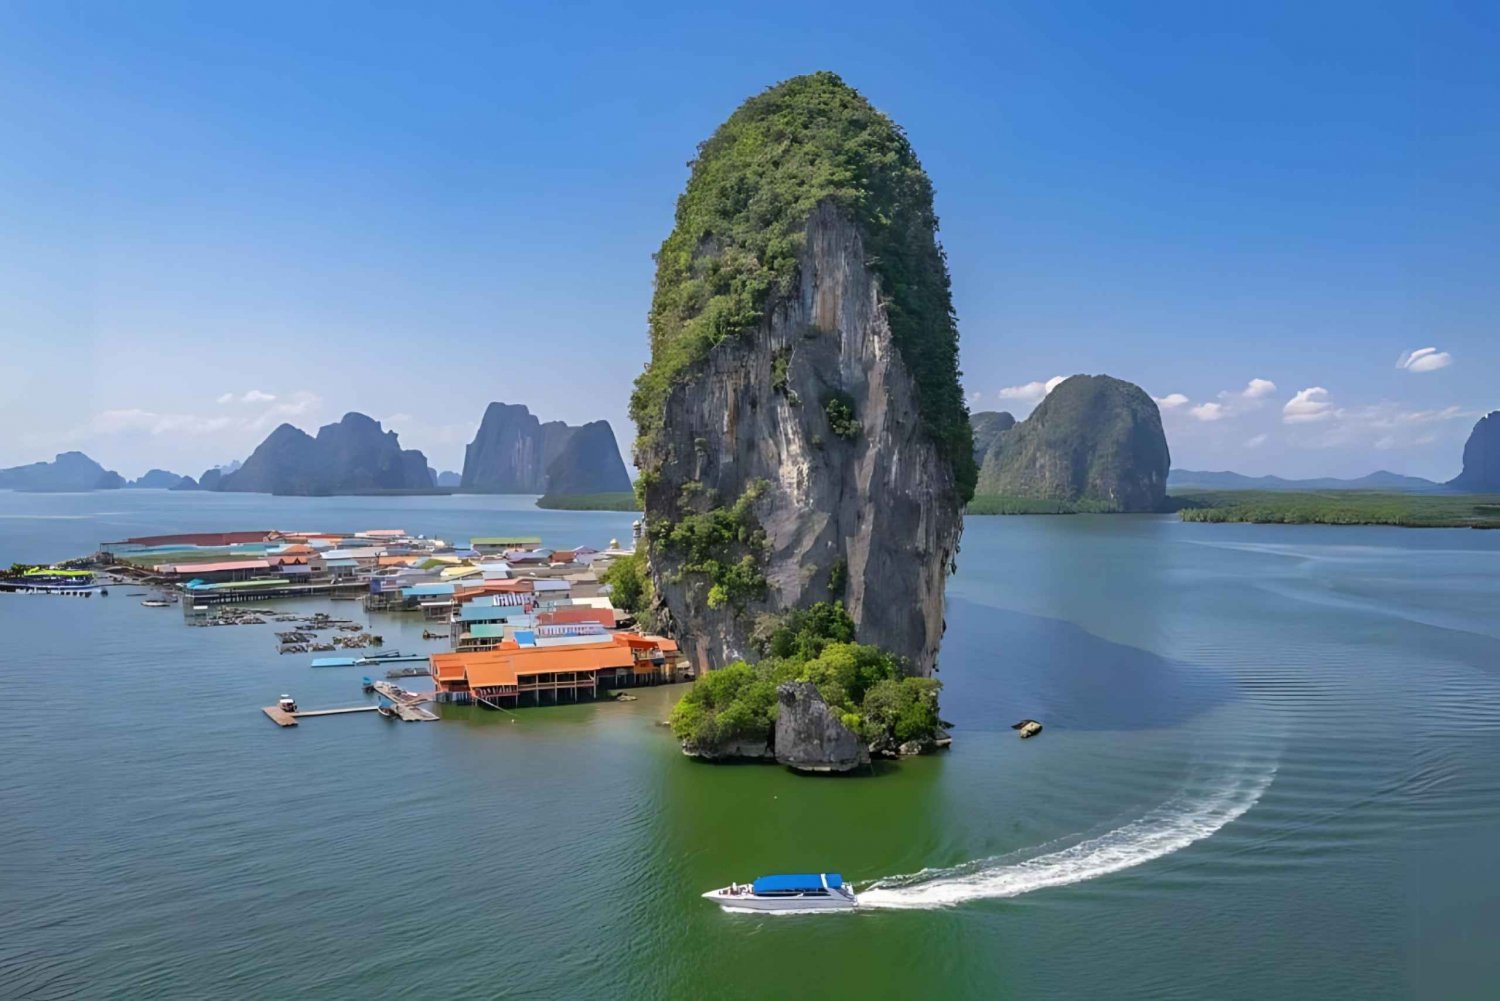 Phuket : Canoa marina sull'isola di James Bond in motoscafo